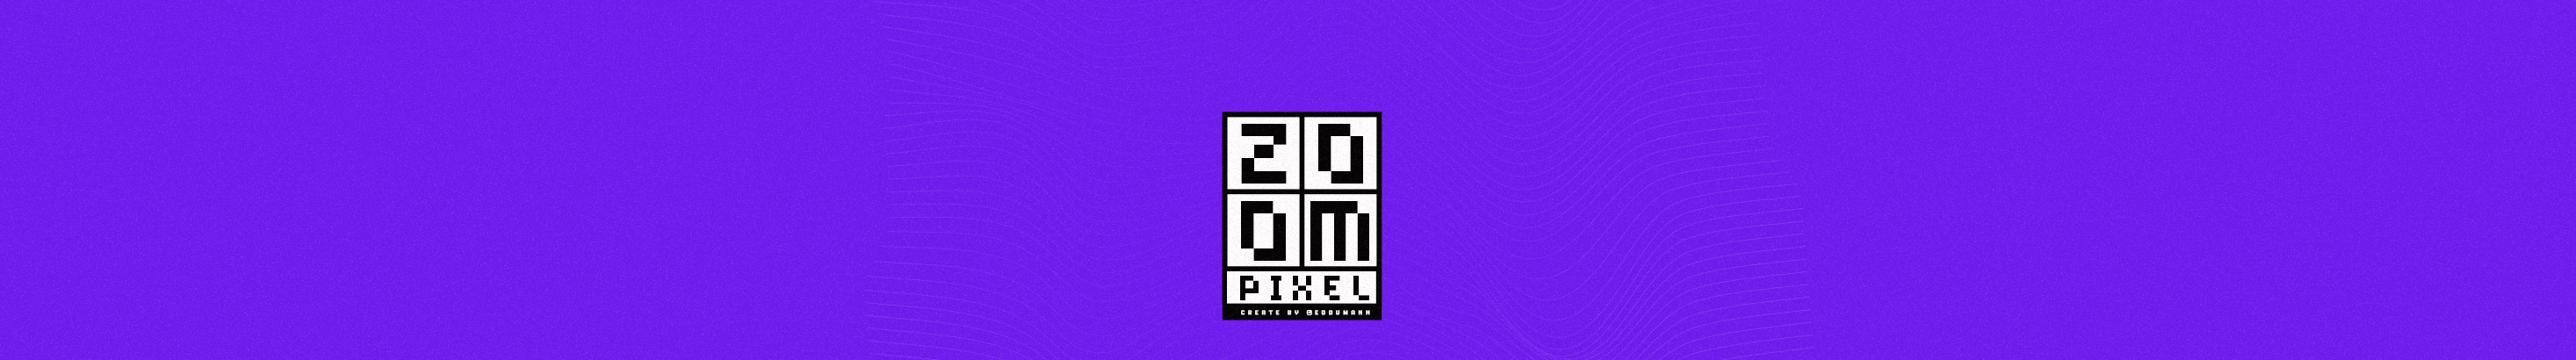 Banner profilu uživatele Zoom Pixel